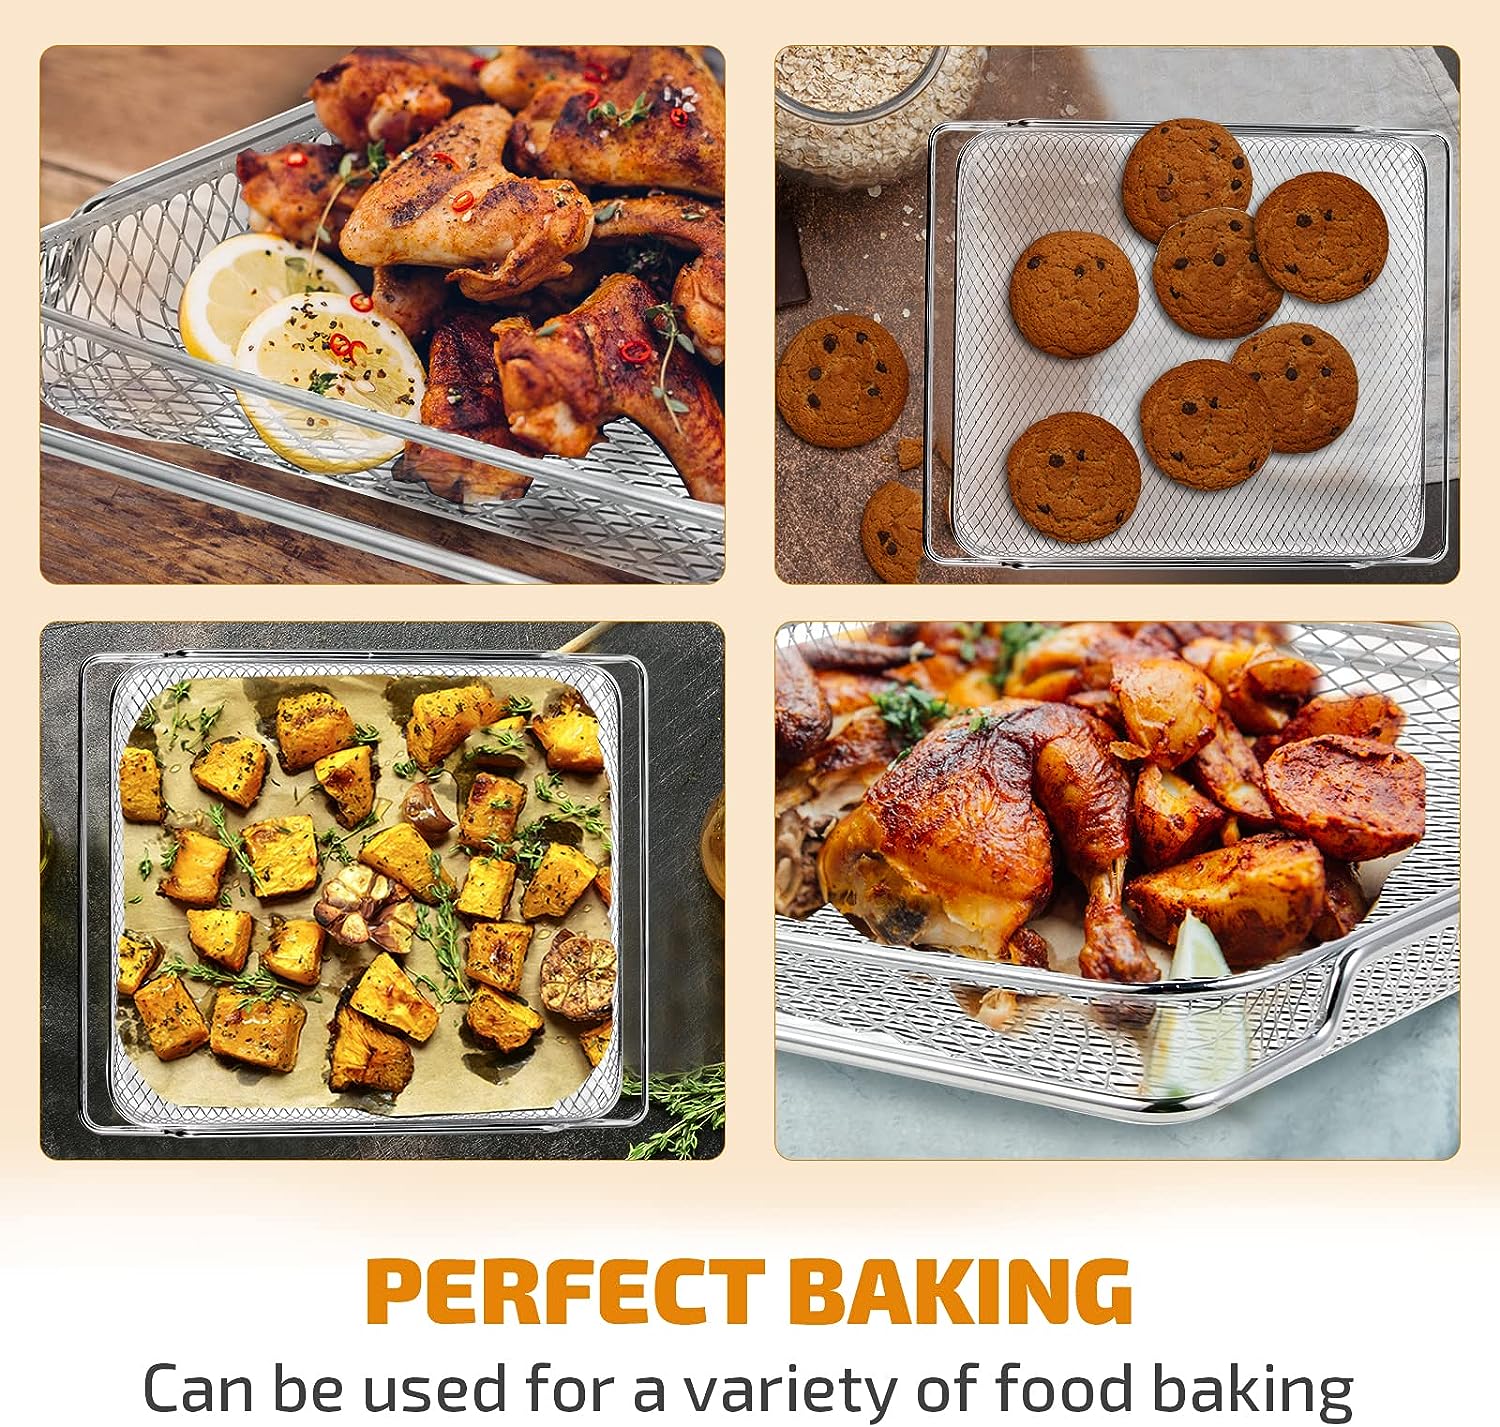 13 × 13 Nonstick Baking Sheet, Replacement Baking Pan for Ninja SP100, SP101, SP1001C, SP201 Foodi Air Fry Oven, Baking Tray for Ninja Foodi 8-in